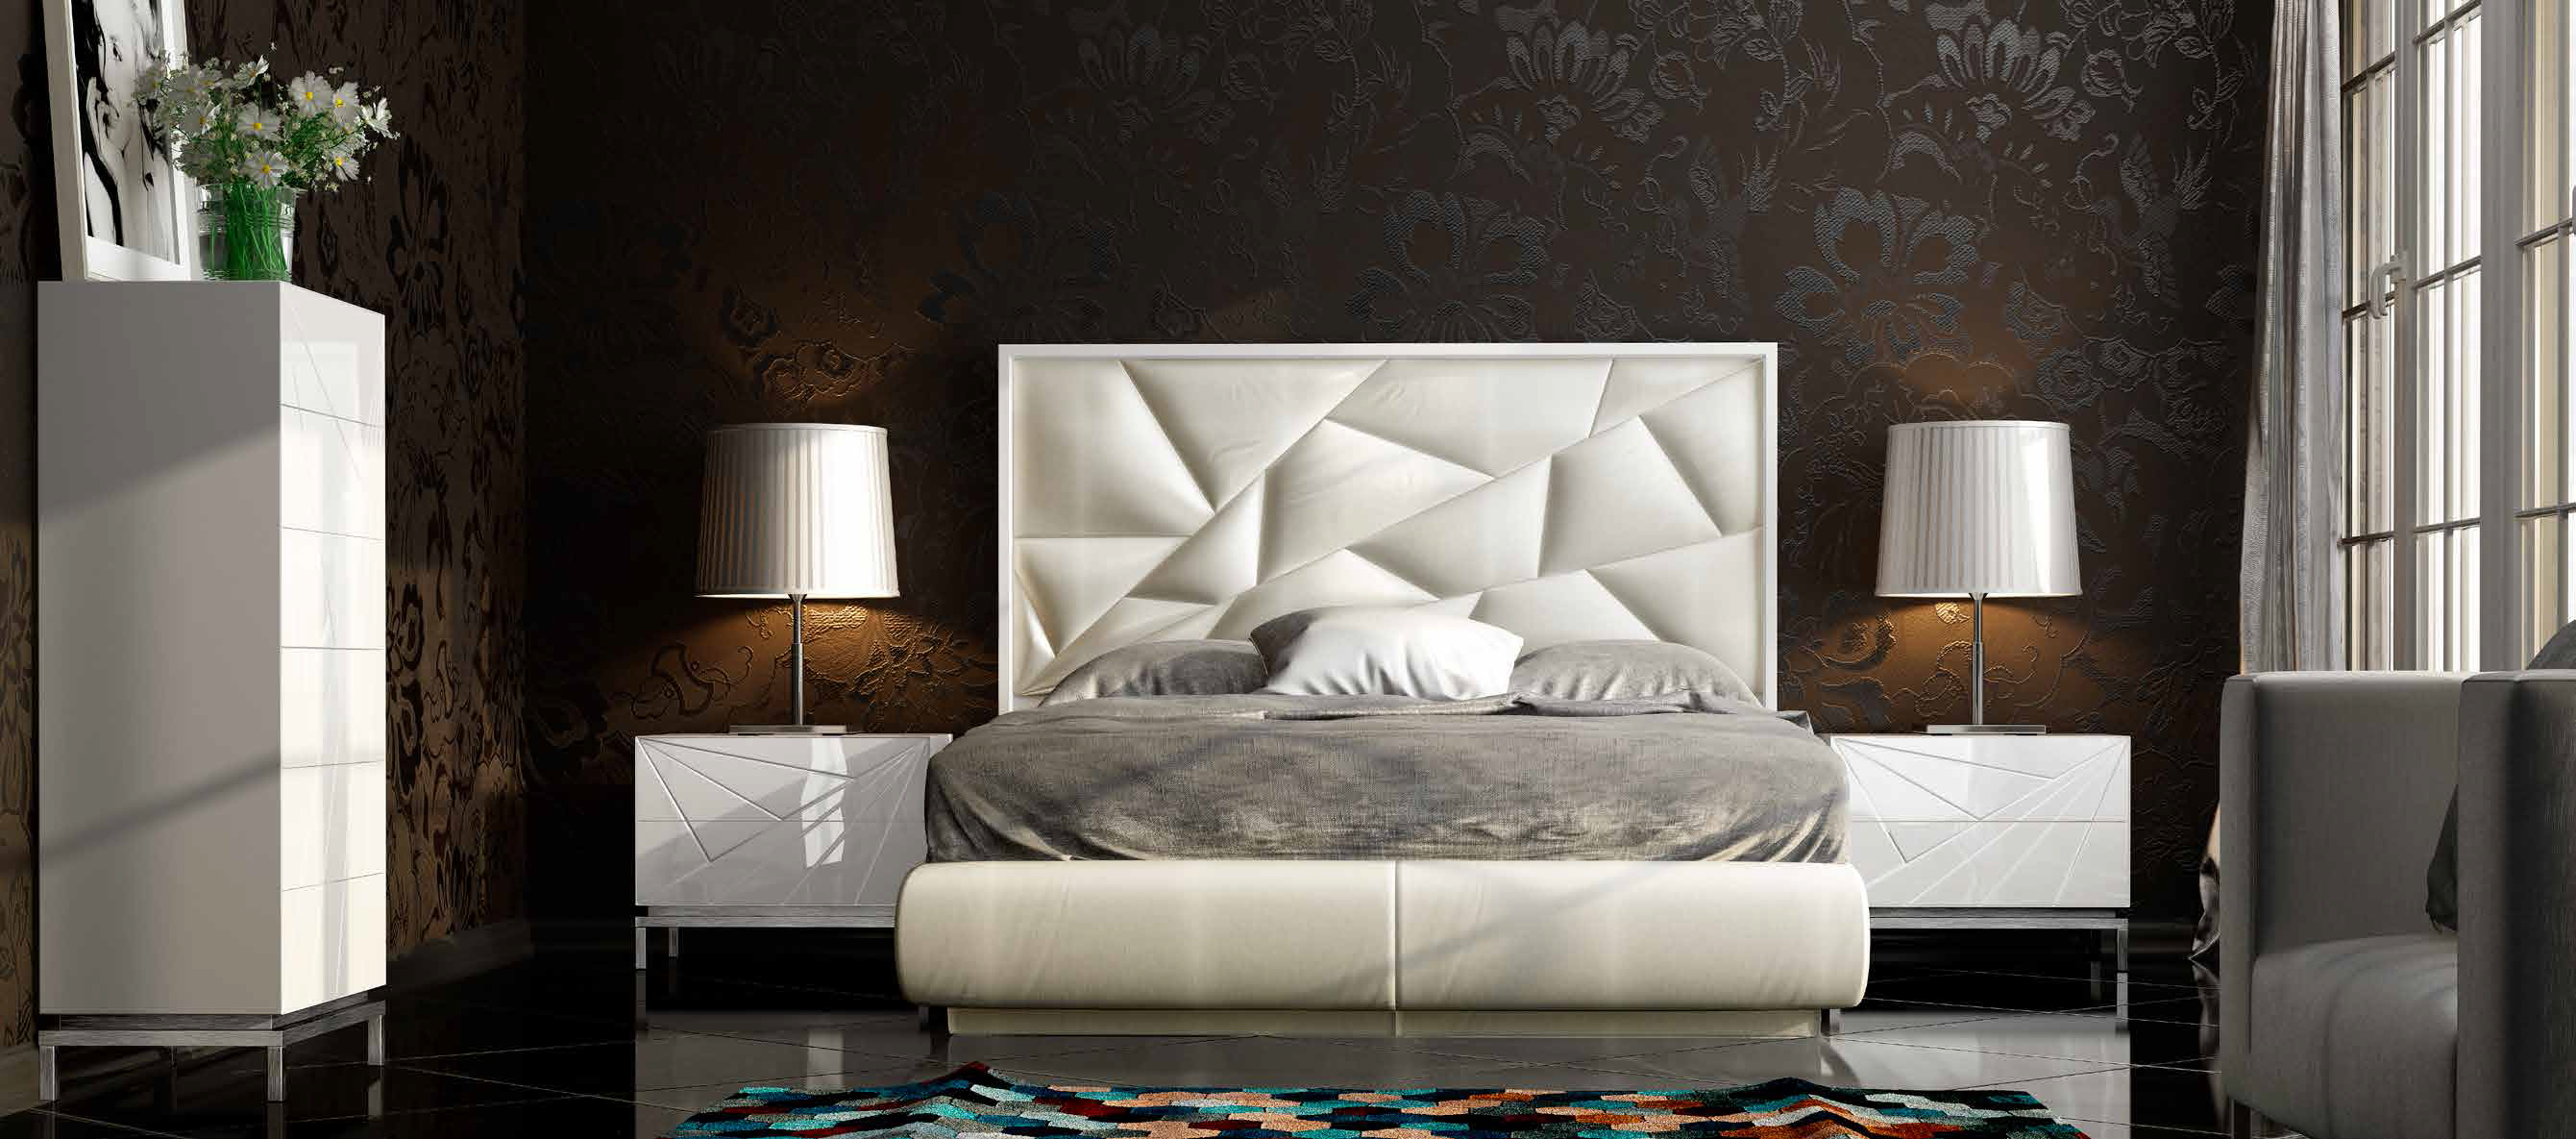 Brands Franco Furniture Bedrooms vol2, Spain DOR 20